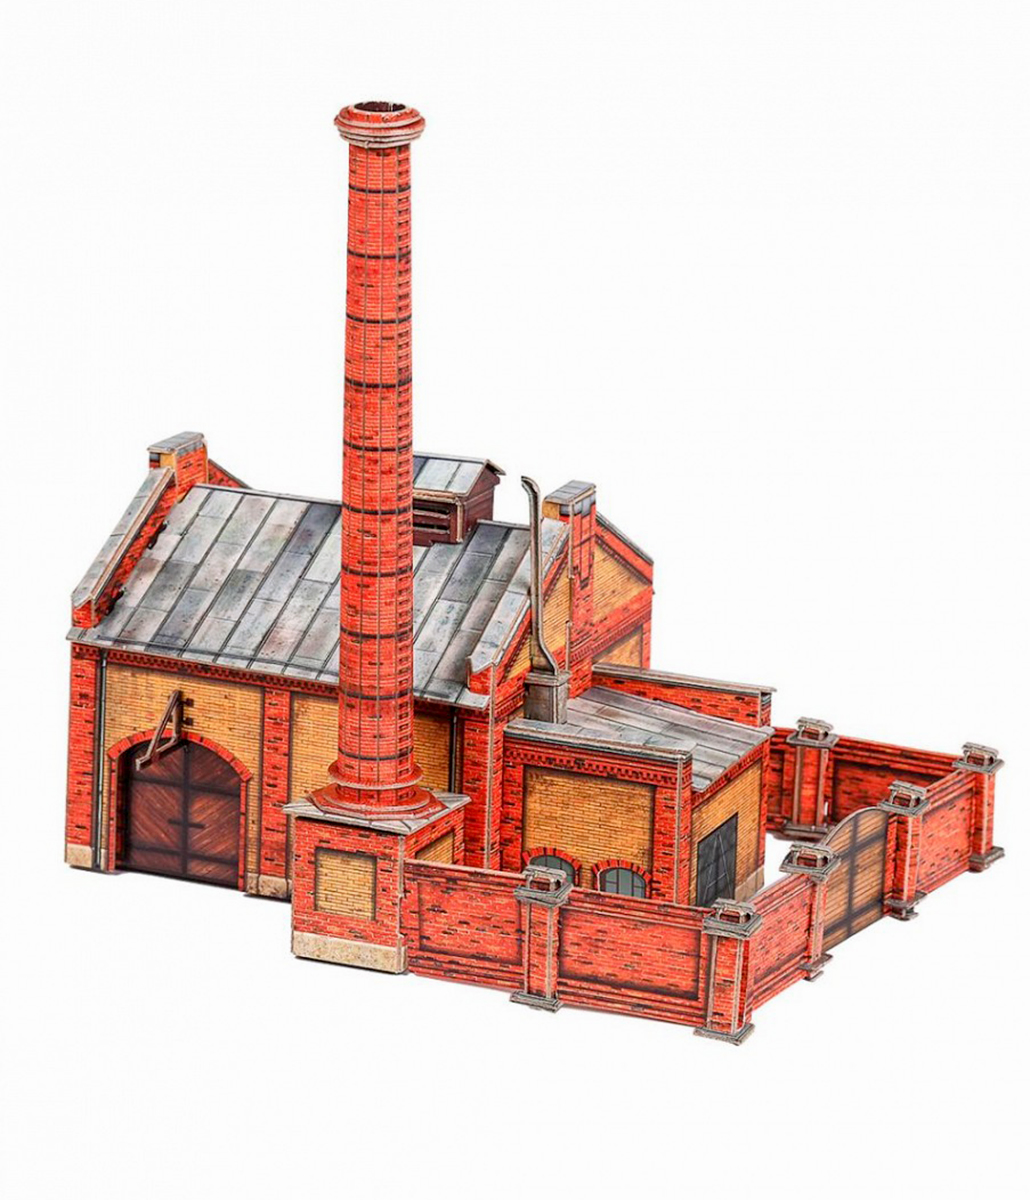 3D Puzzle KARTONMODELLBAU Modell Geschenk Spielzeug Eisenbahn Kesselhaus Neu